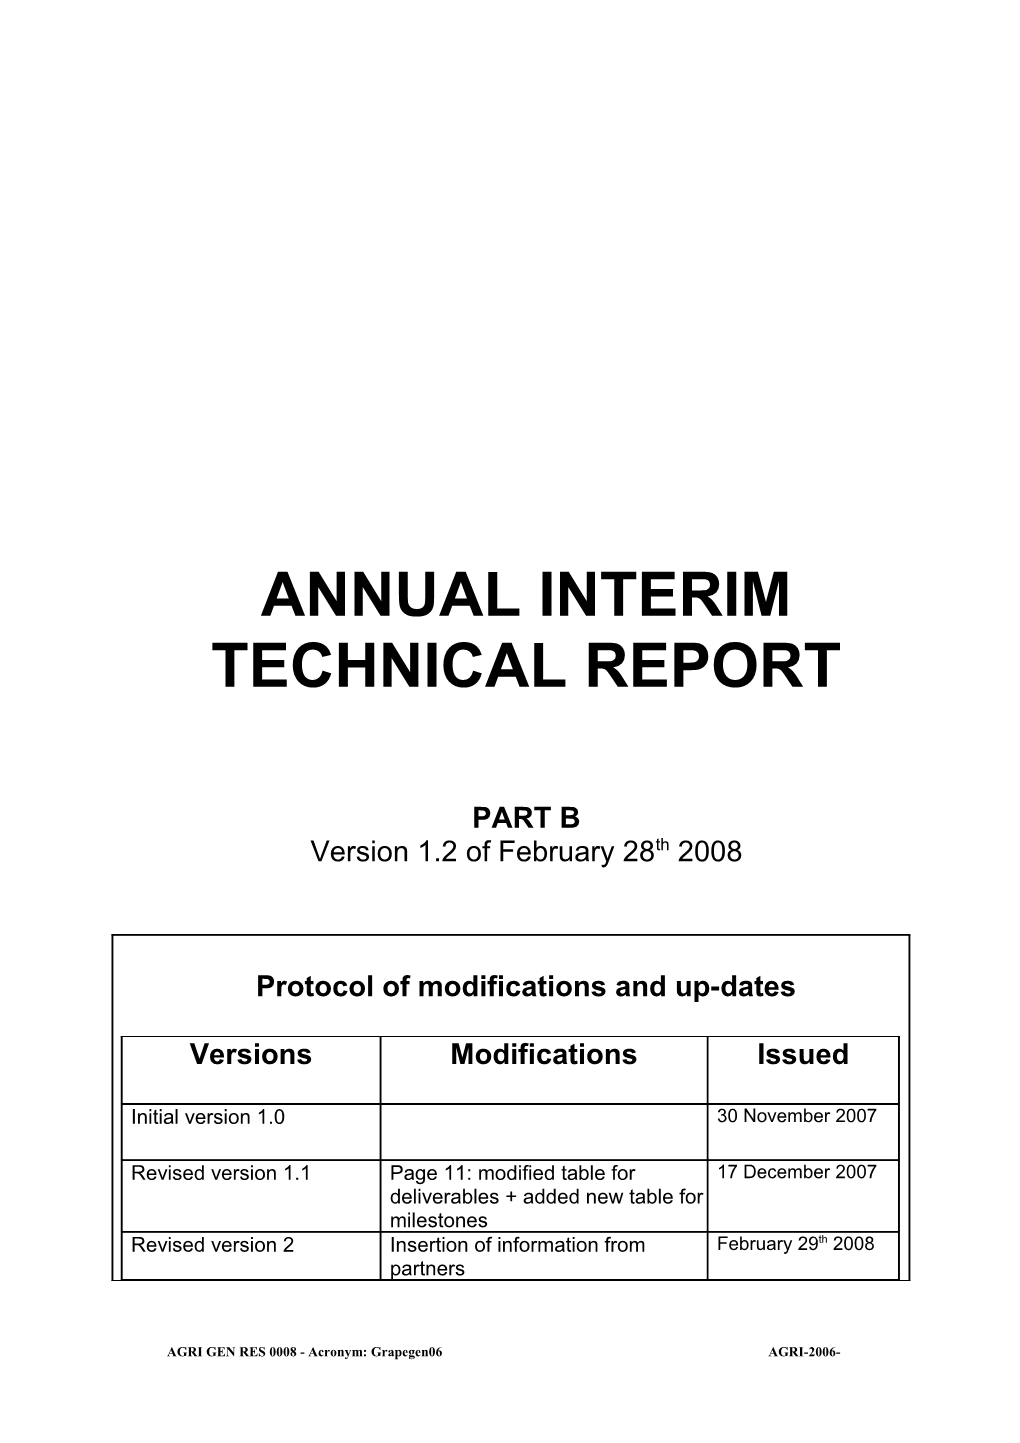 INTERIM REPORT No